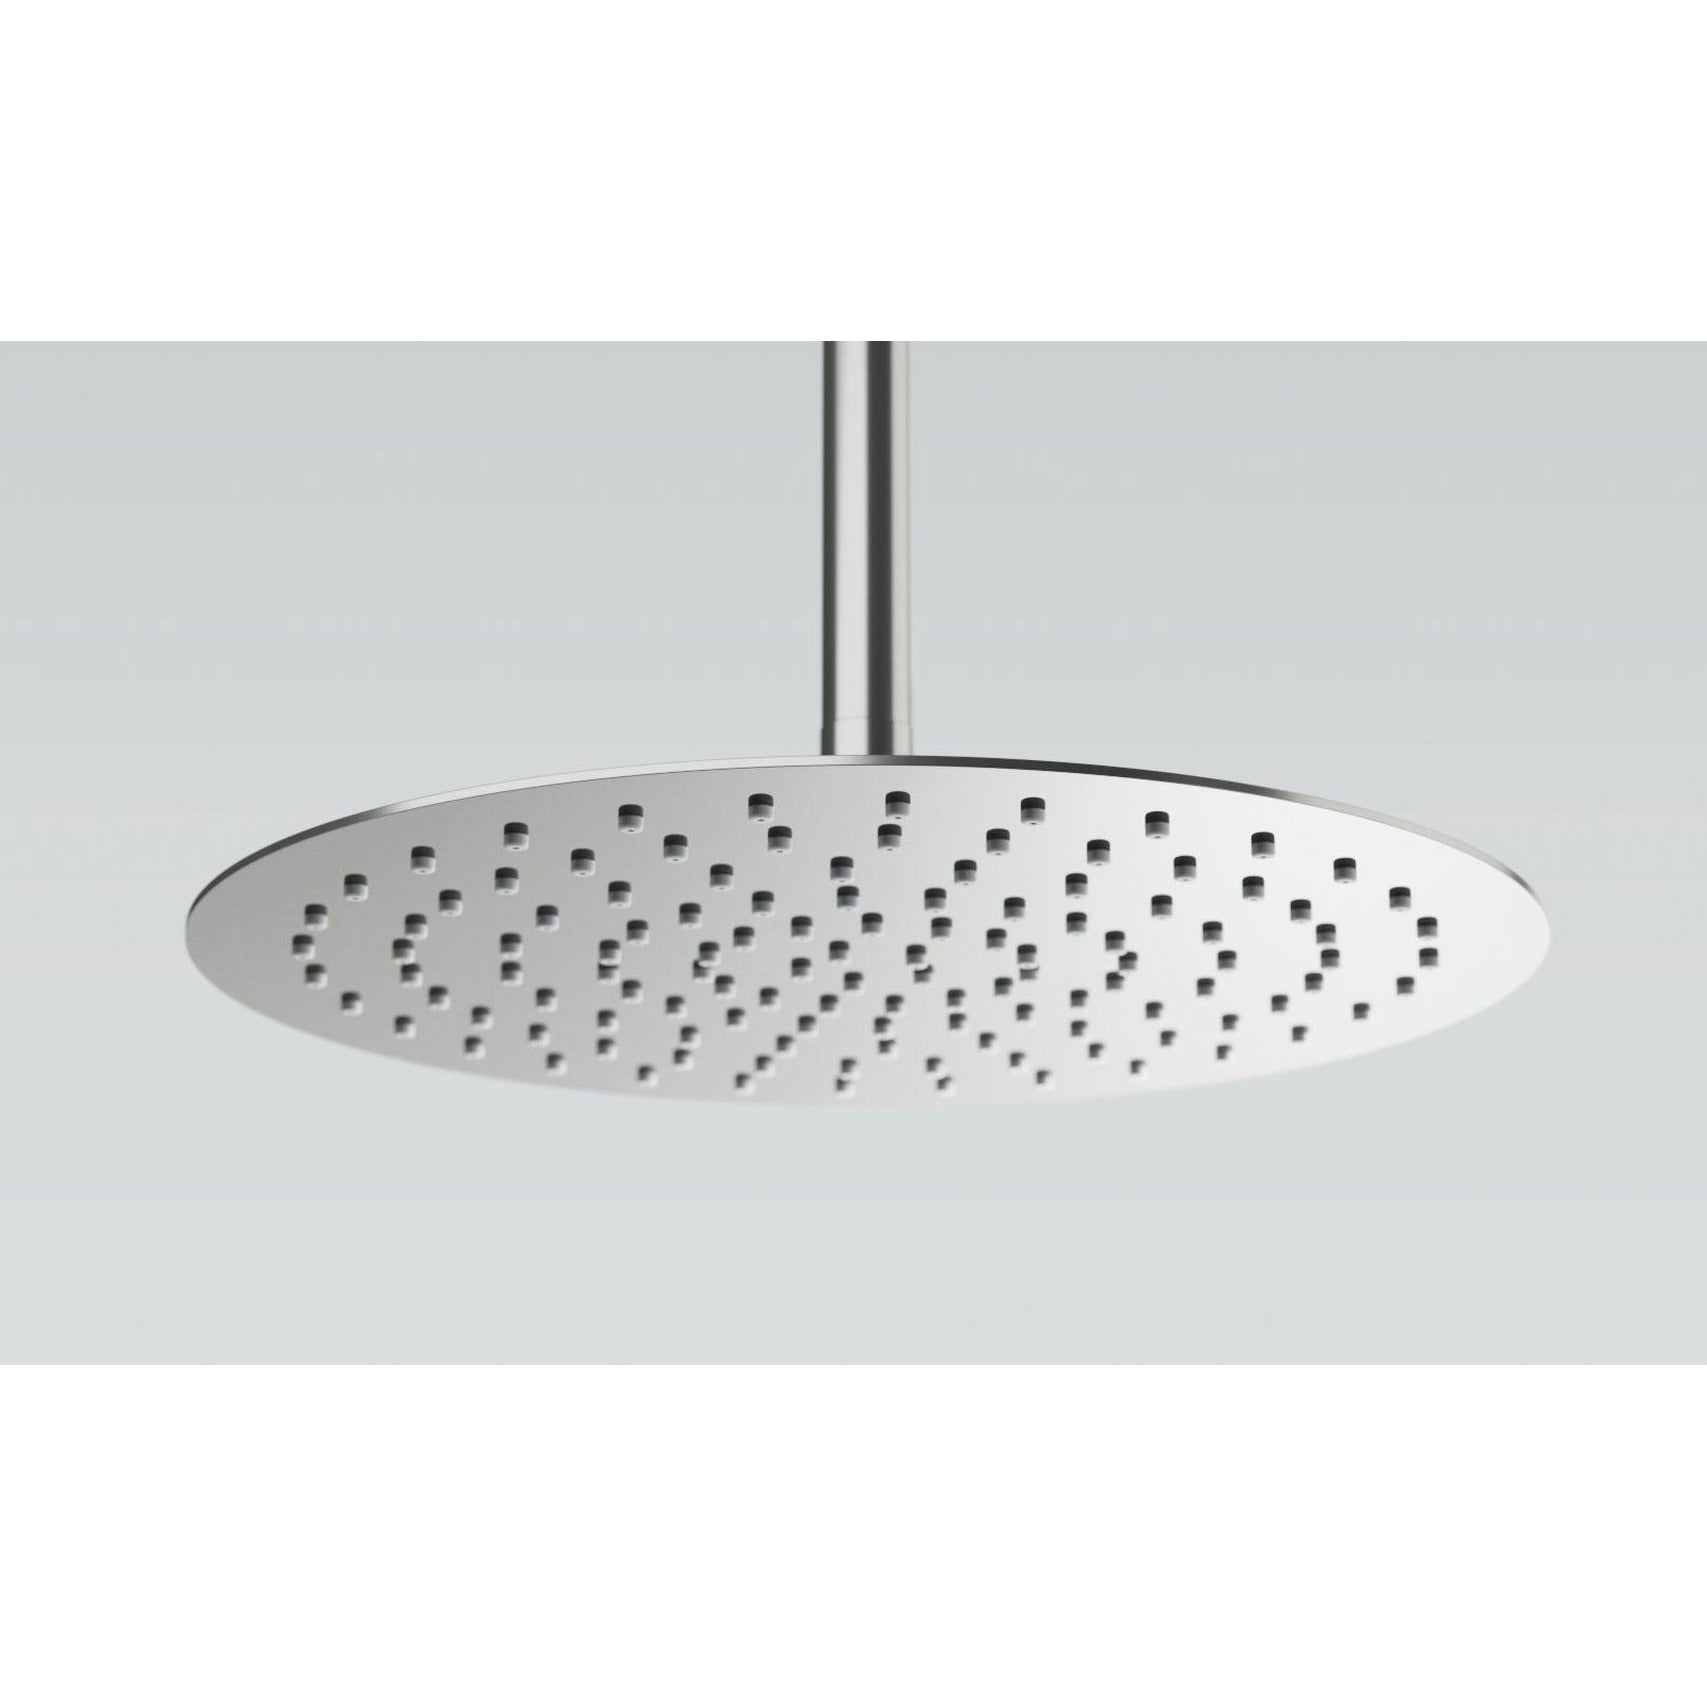 Copenhagen vasca da doccia rotonda, l30 cm